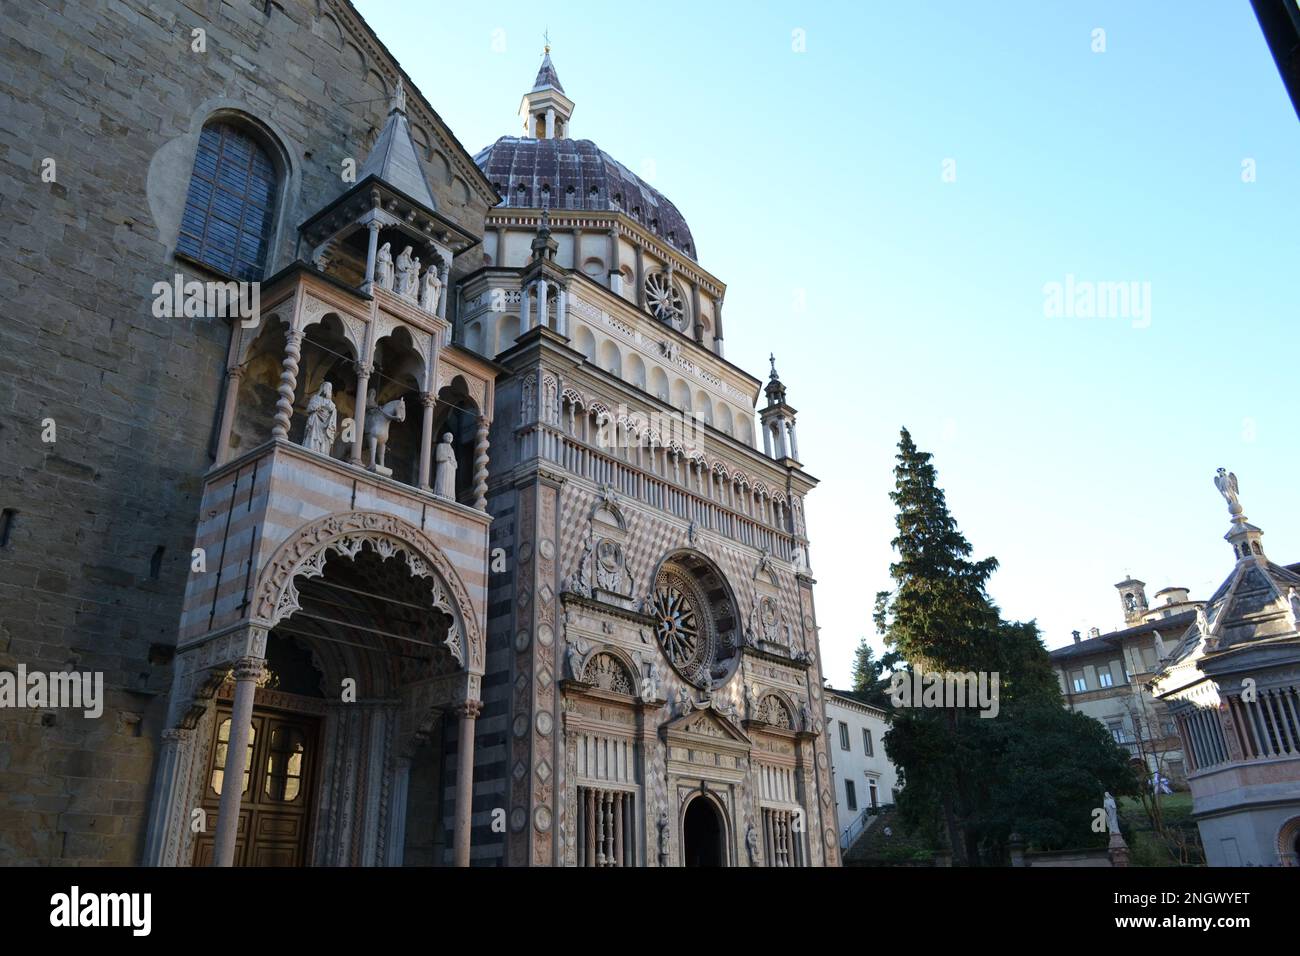 Fassade der berühmten Kathedrale - Basilika Santa Maria Maggiore ist eine große Kirche in der oberen Stadt Bergamo, Norditalien. Stockfoto